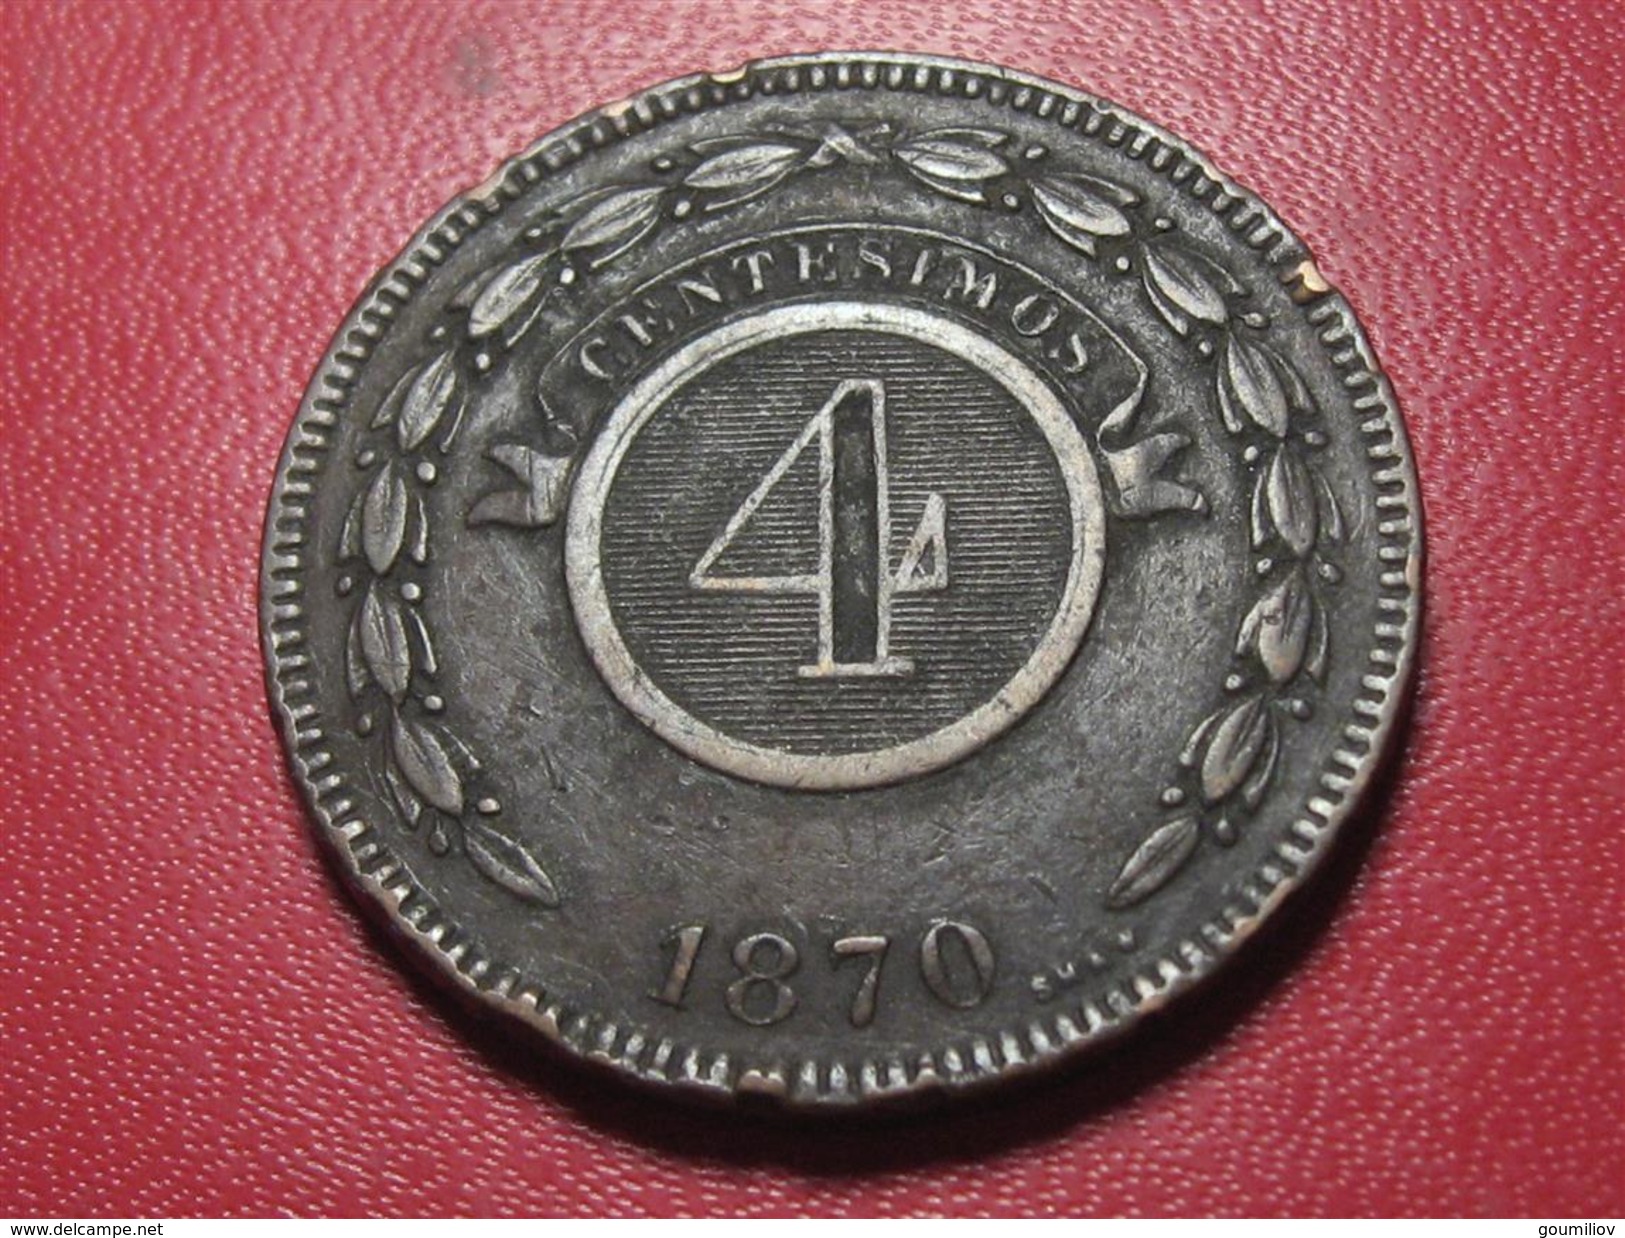 Paraguay - 4 Centavos 1870 3650 - Paraguay